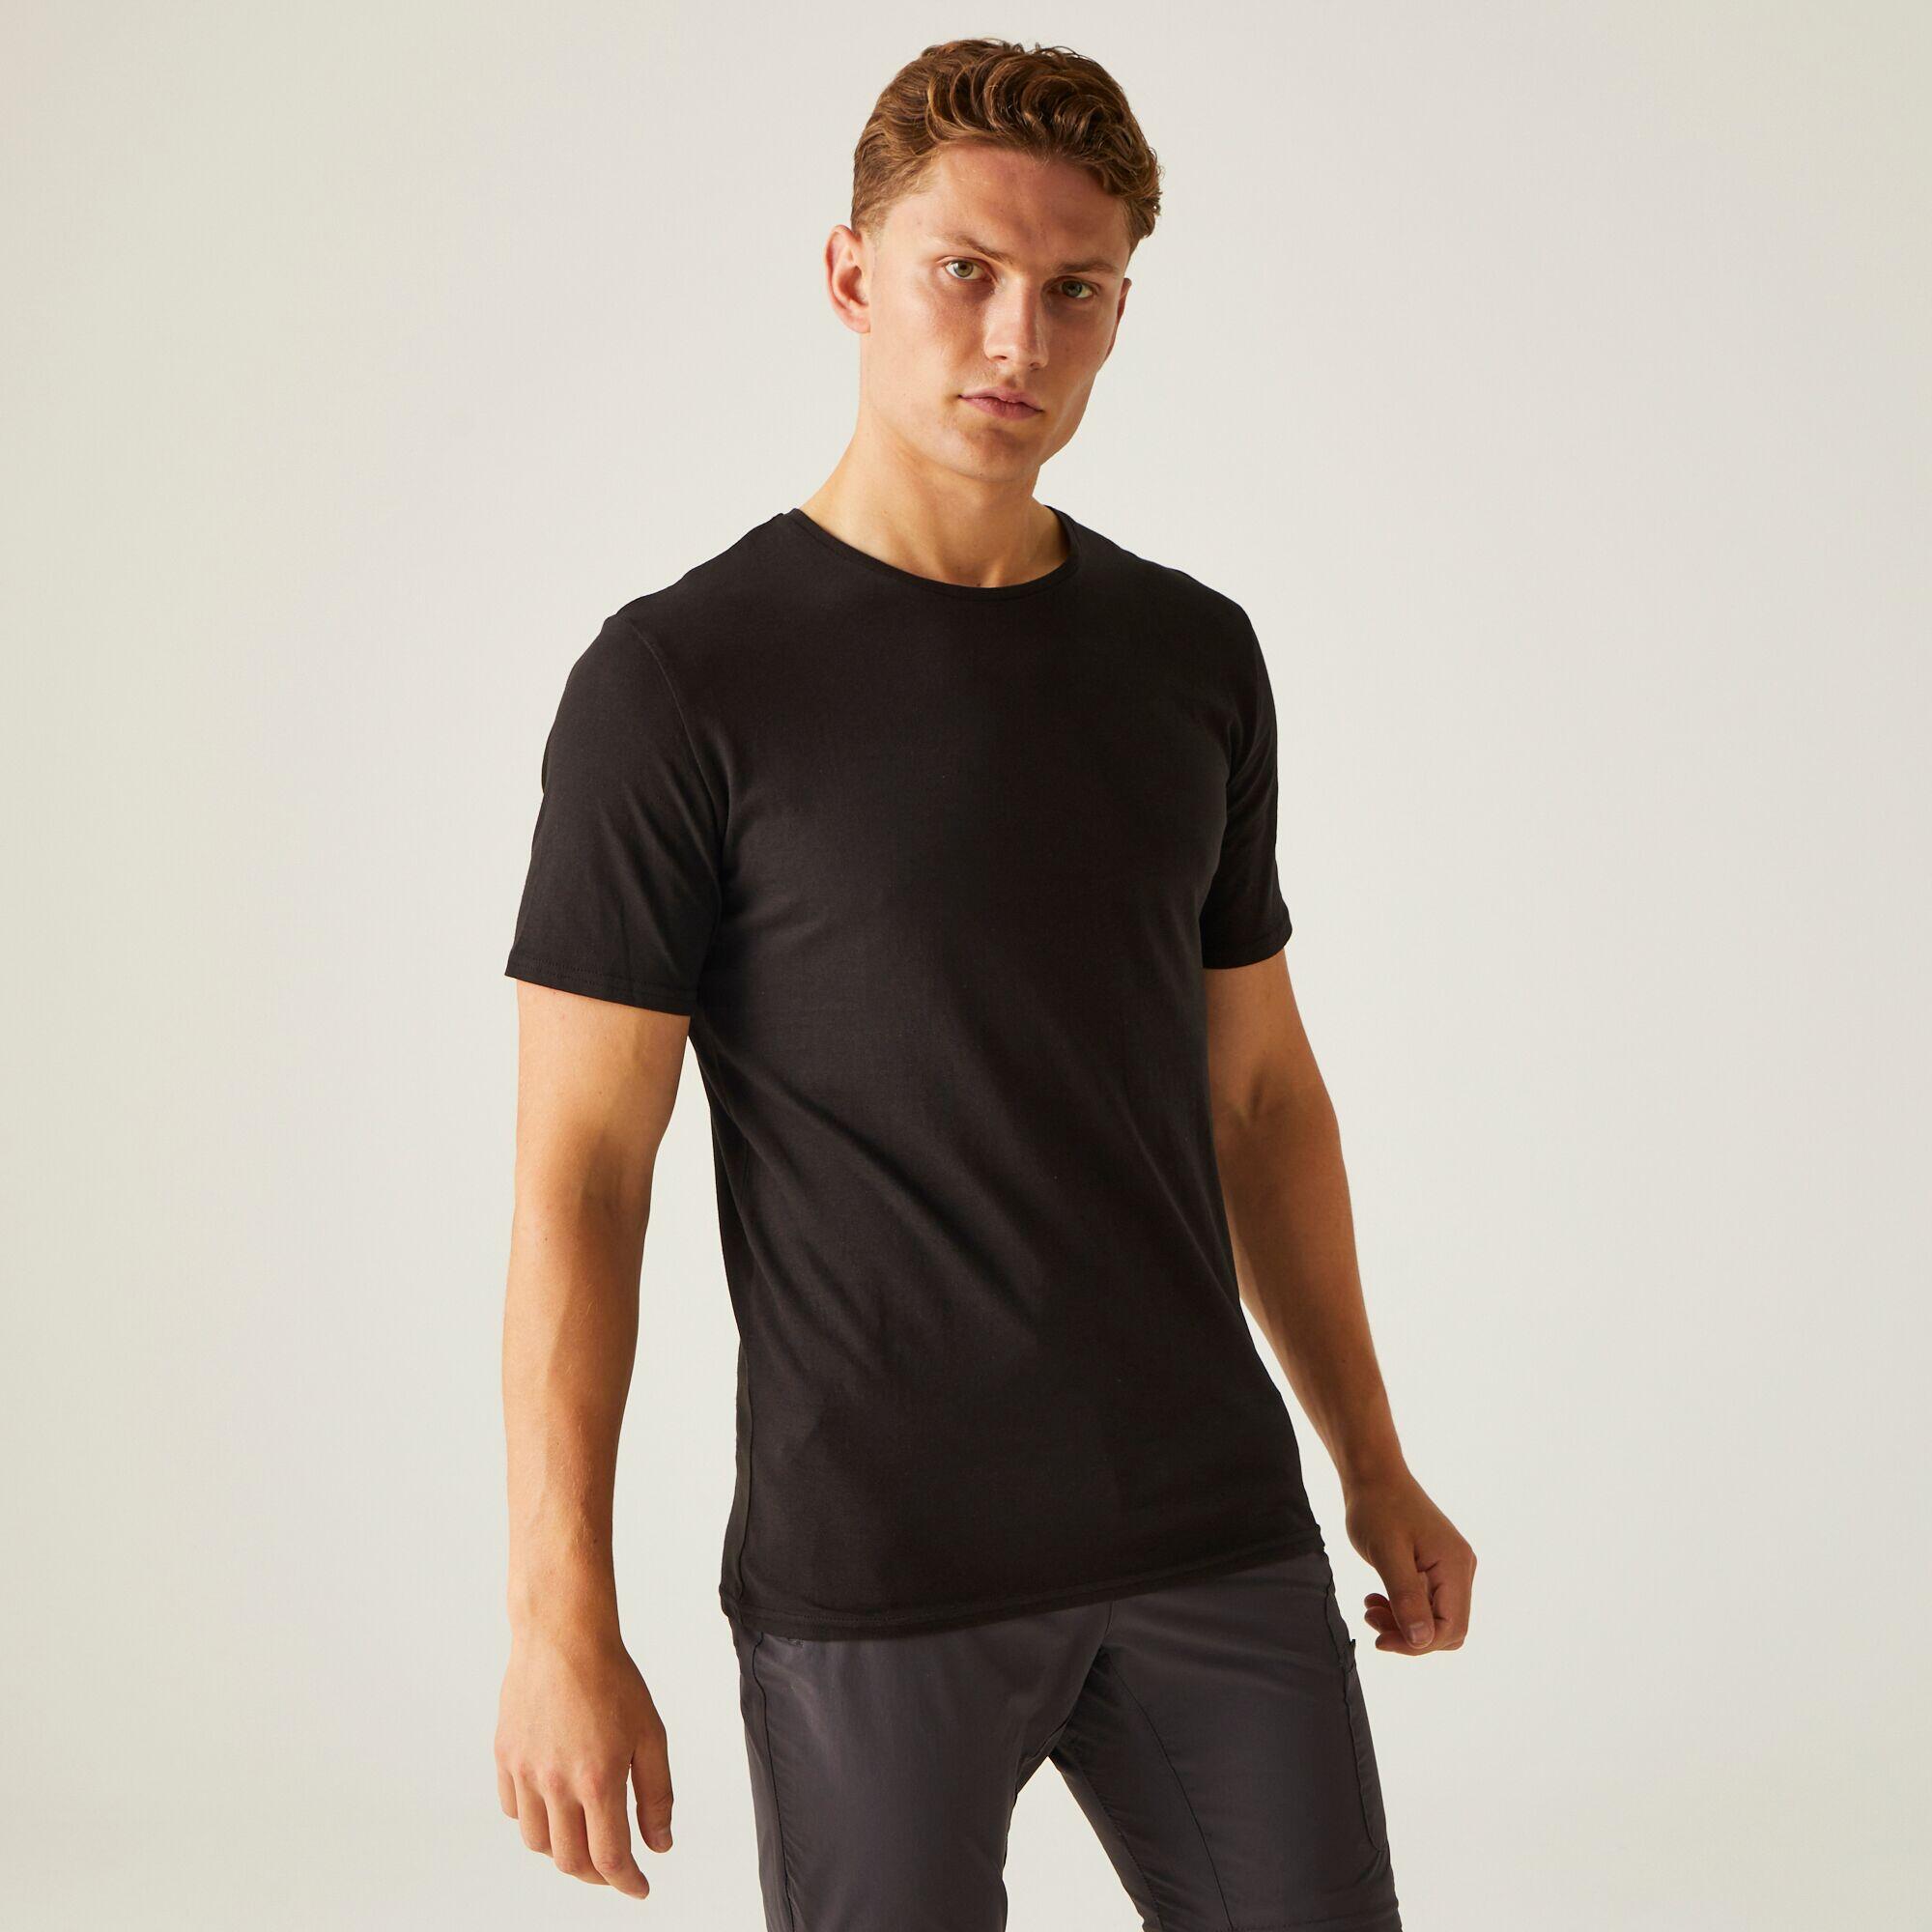 REGATTA Tait Men's Walking Short Sleeve T-Shirt - Black